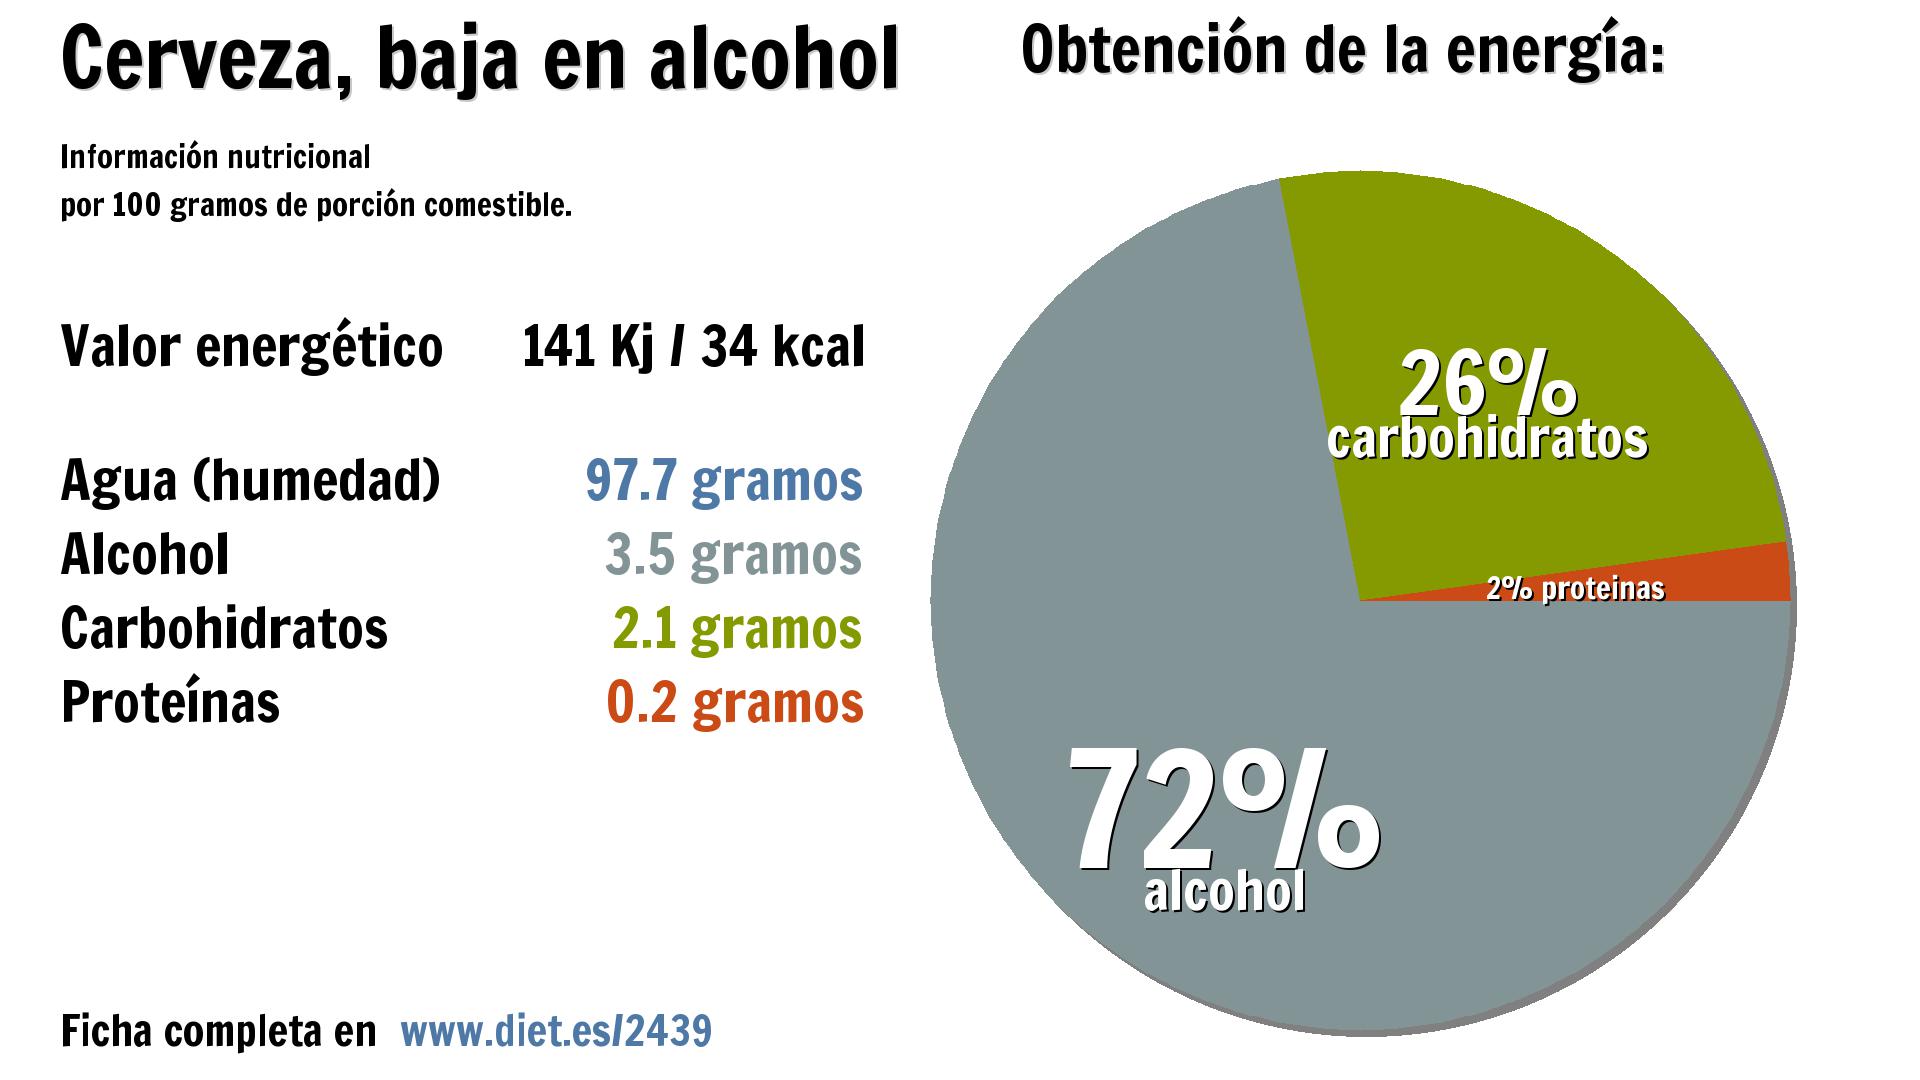 Cerveza, baja en alcohol: energía 141 Kj, agua 98 g., alcohol 4 g. y carbohidratos 2 g.